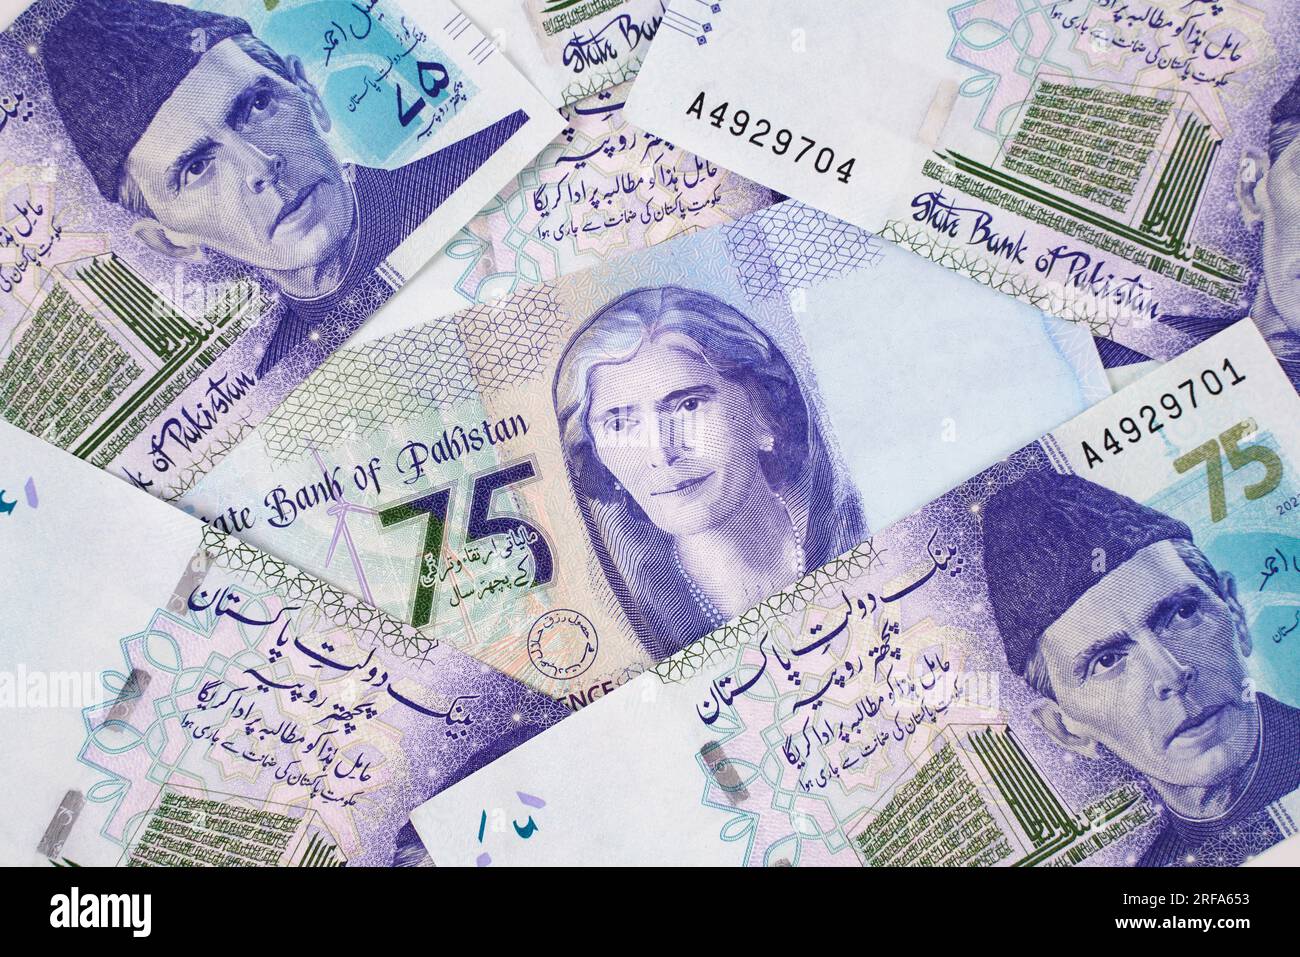 Pakistani 75 rupees bank note or money isolated on white background Stock Photo